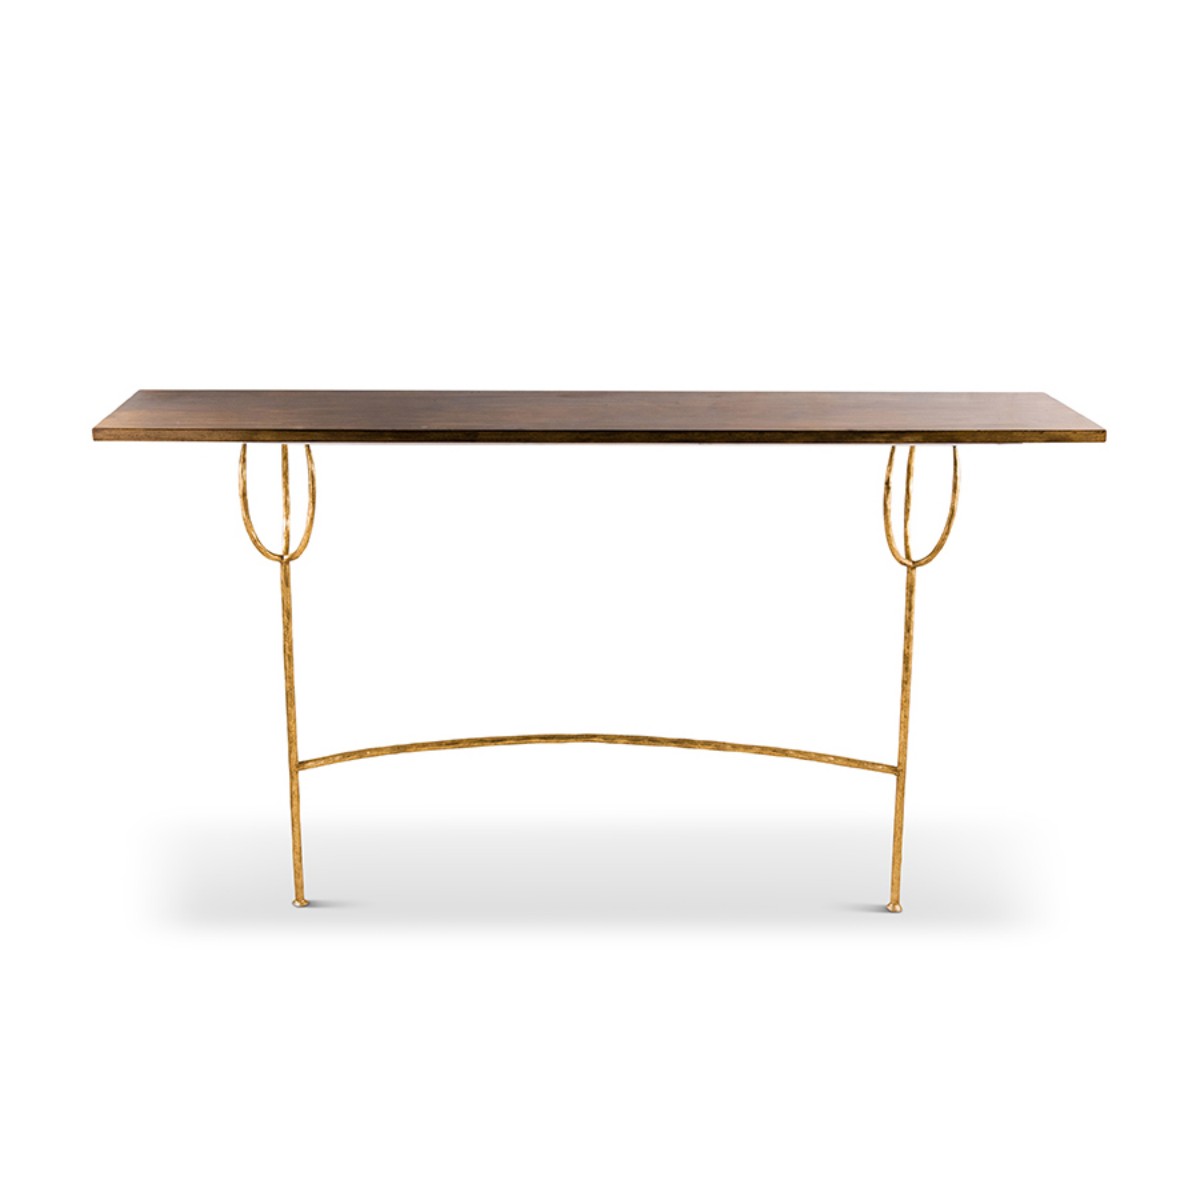 Porta Romana I Logan Hall Table I Gold with French Polished Wood Top